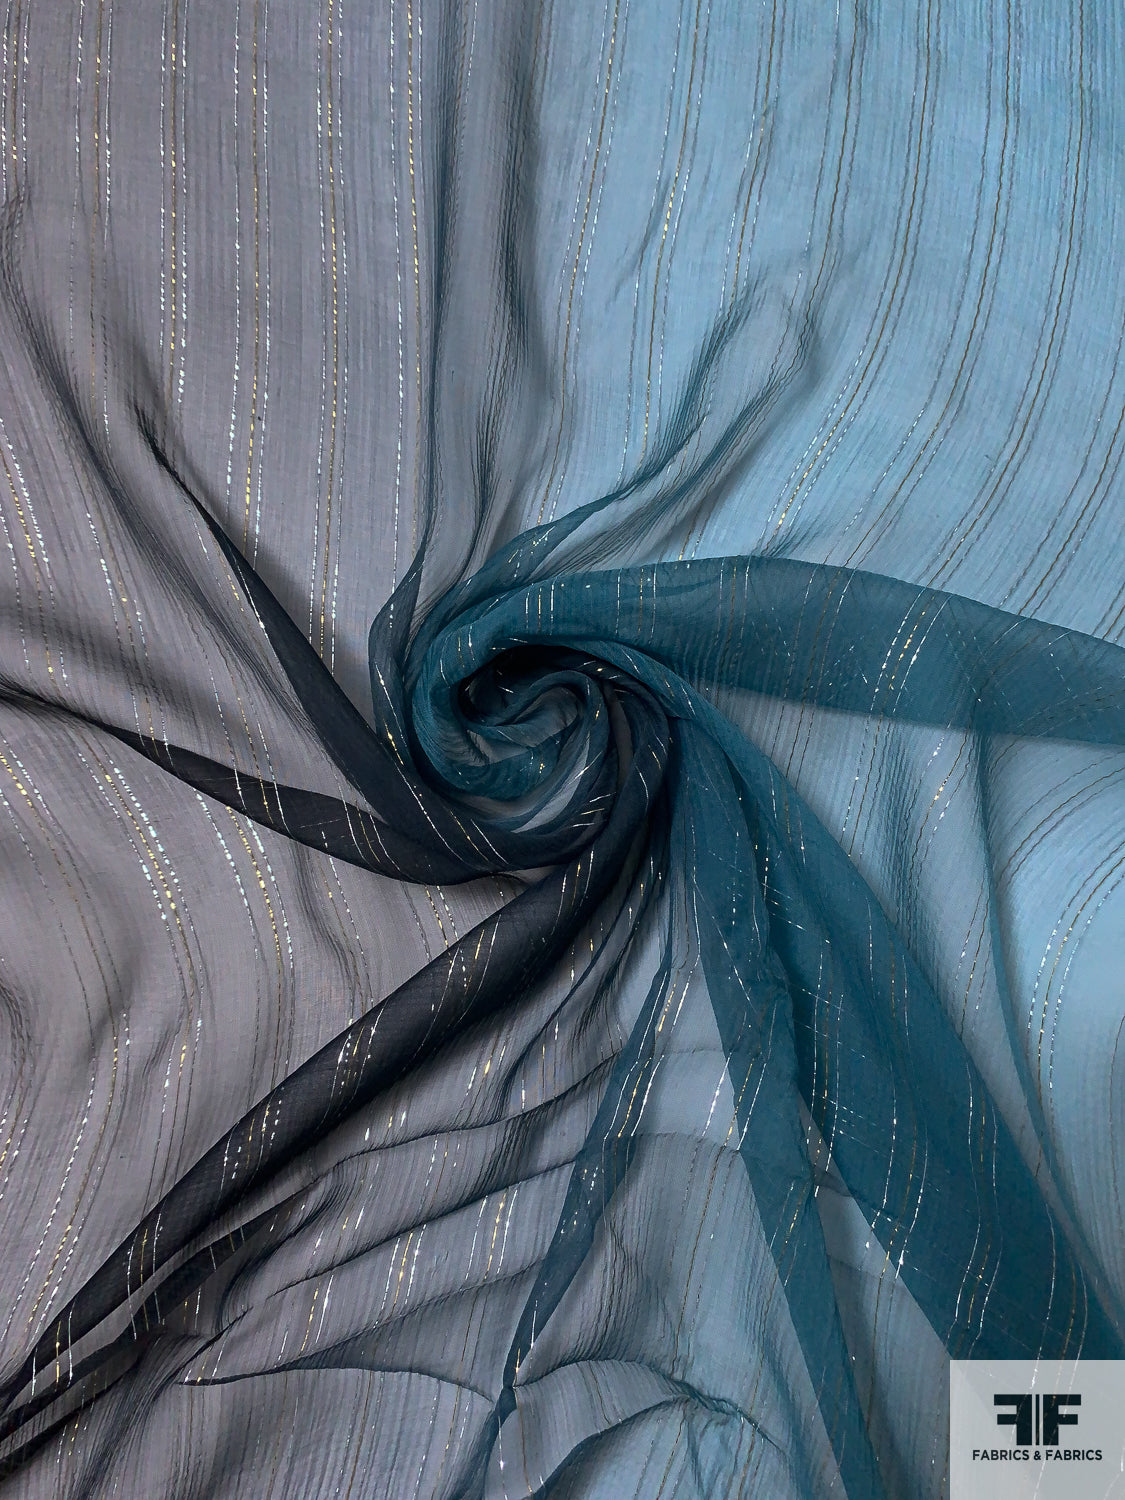 Lurex Pinstriped Ombré Printed Silk Chiffon - Black / Smokey Turquoise / Grey / Silver / Gold